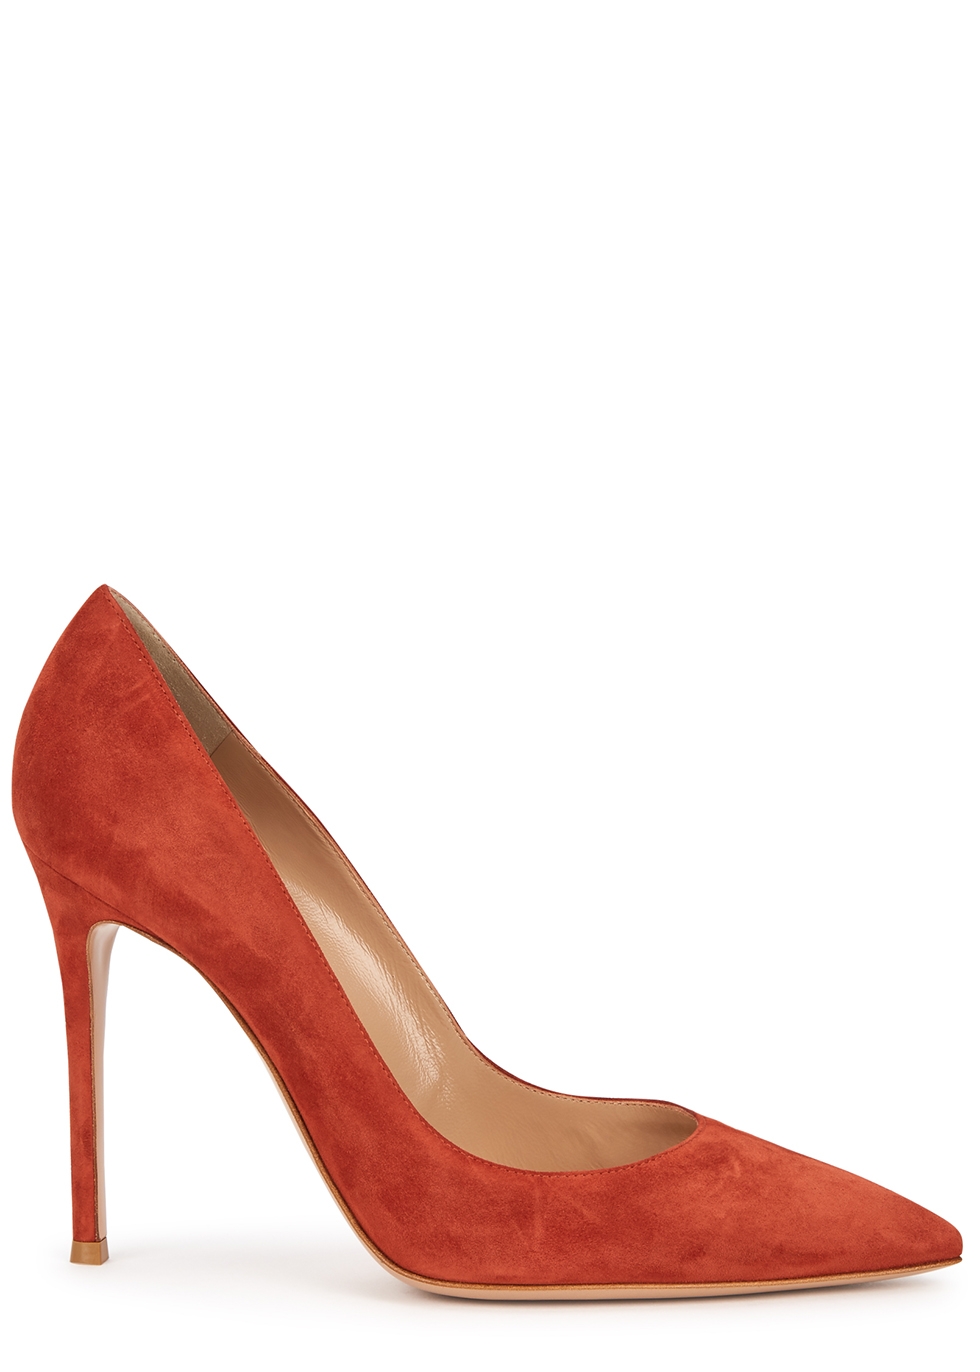 gianvito rossi perspex heels